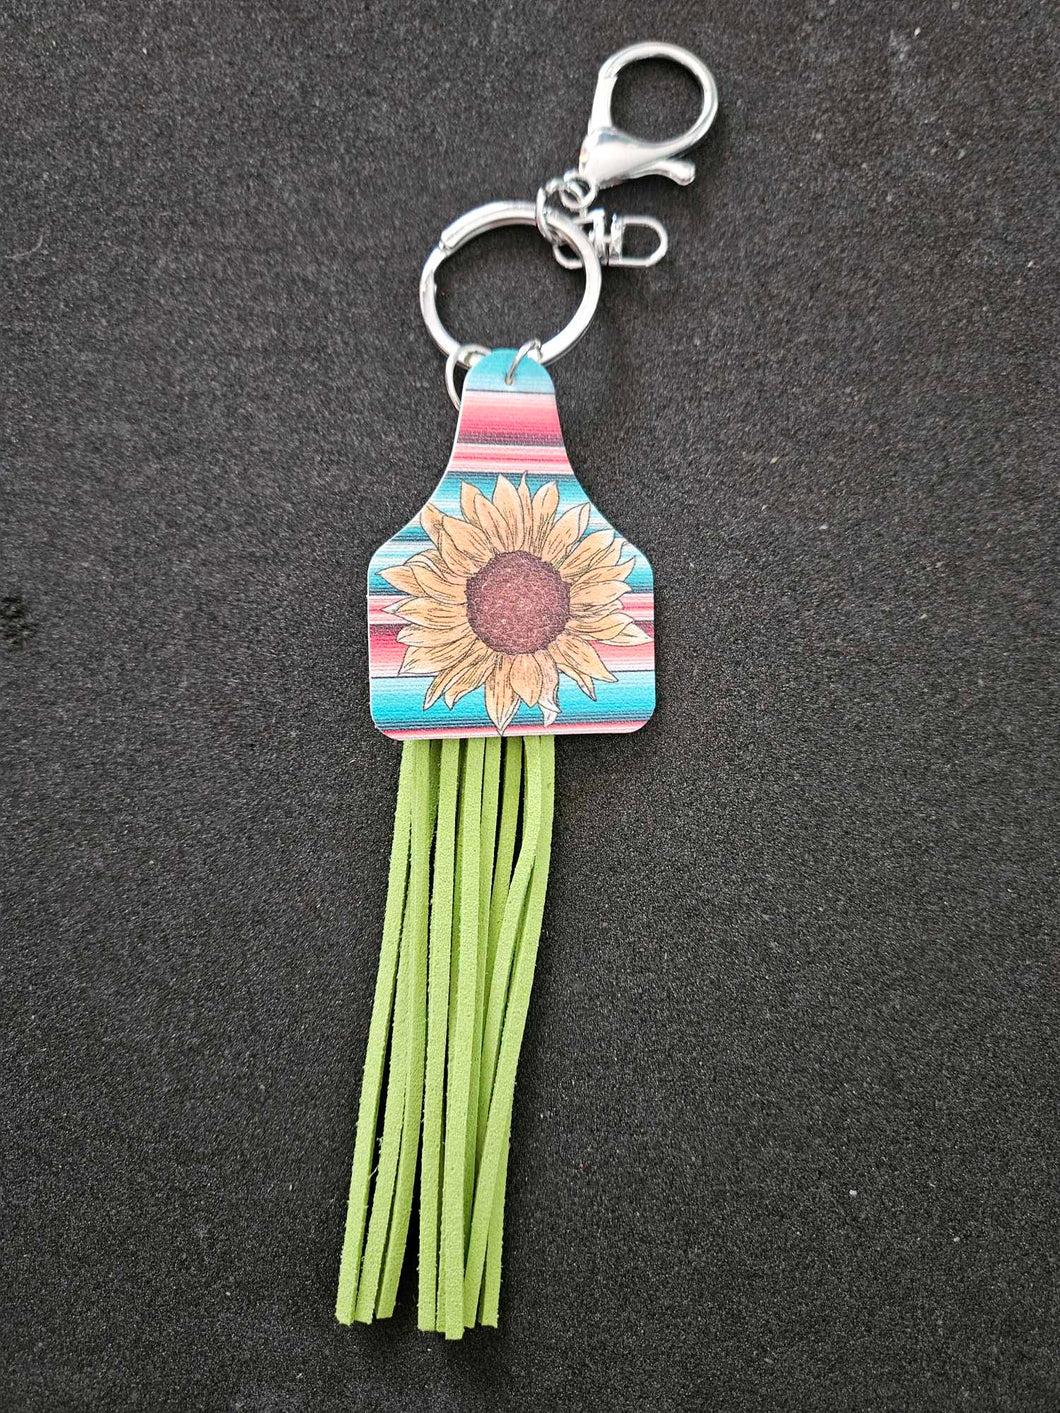 Cute Southwest Sunflower Keychain